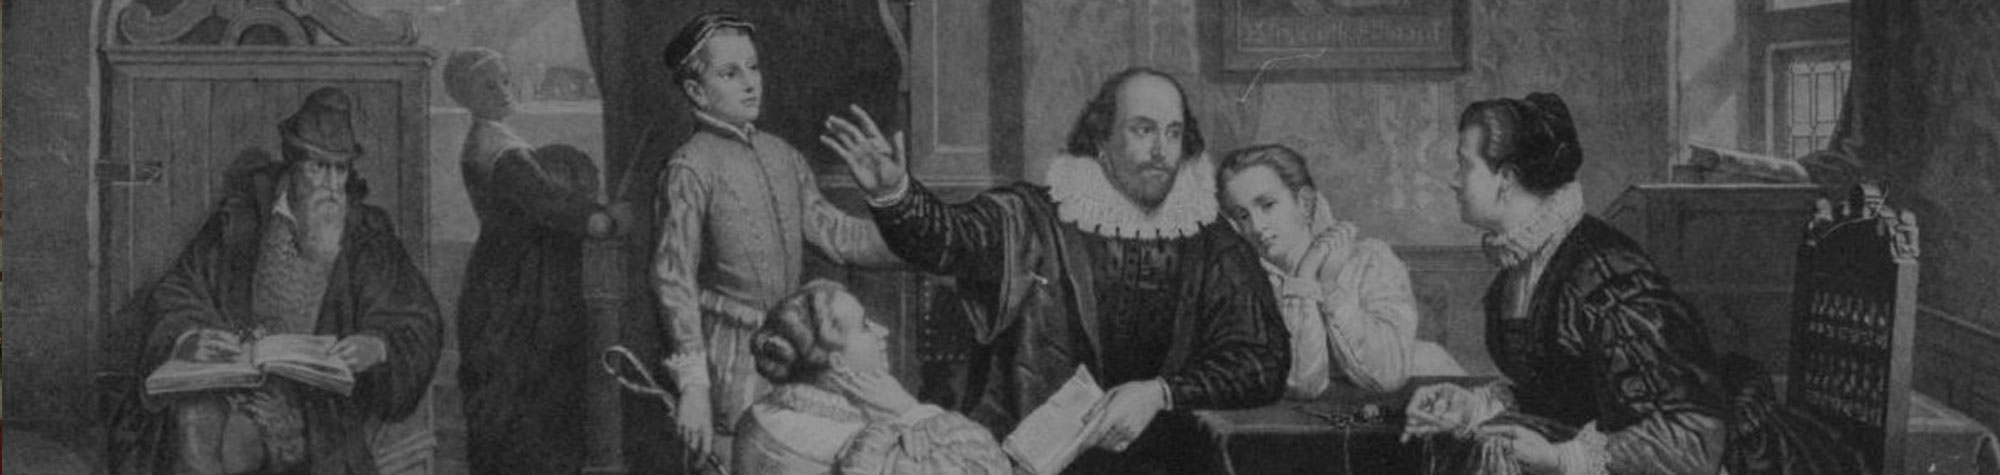 Theater Inspirations: William Shakespeare